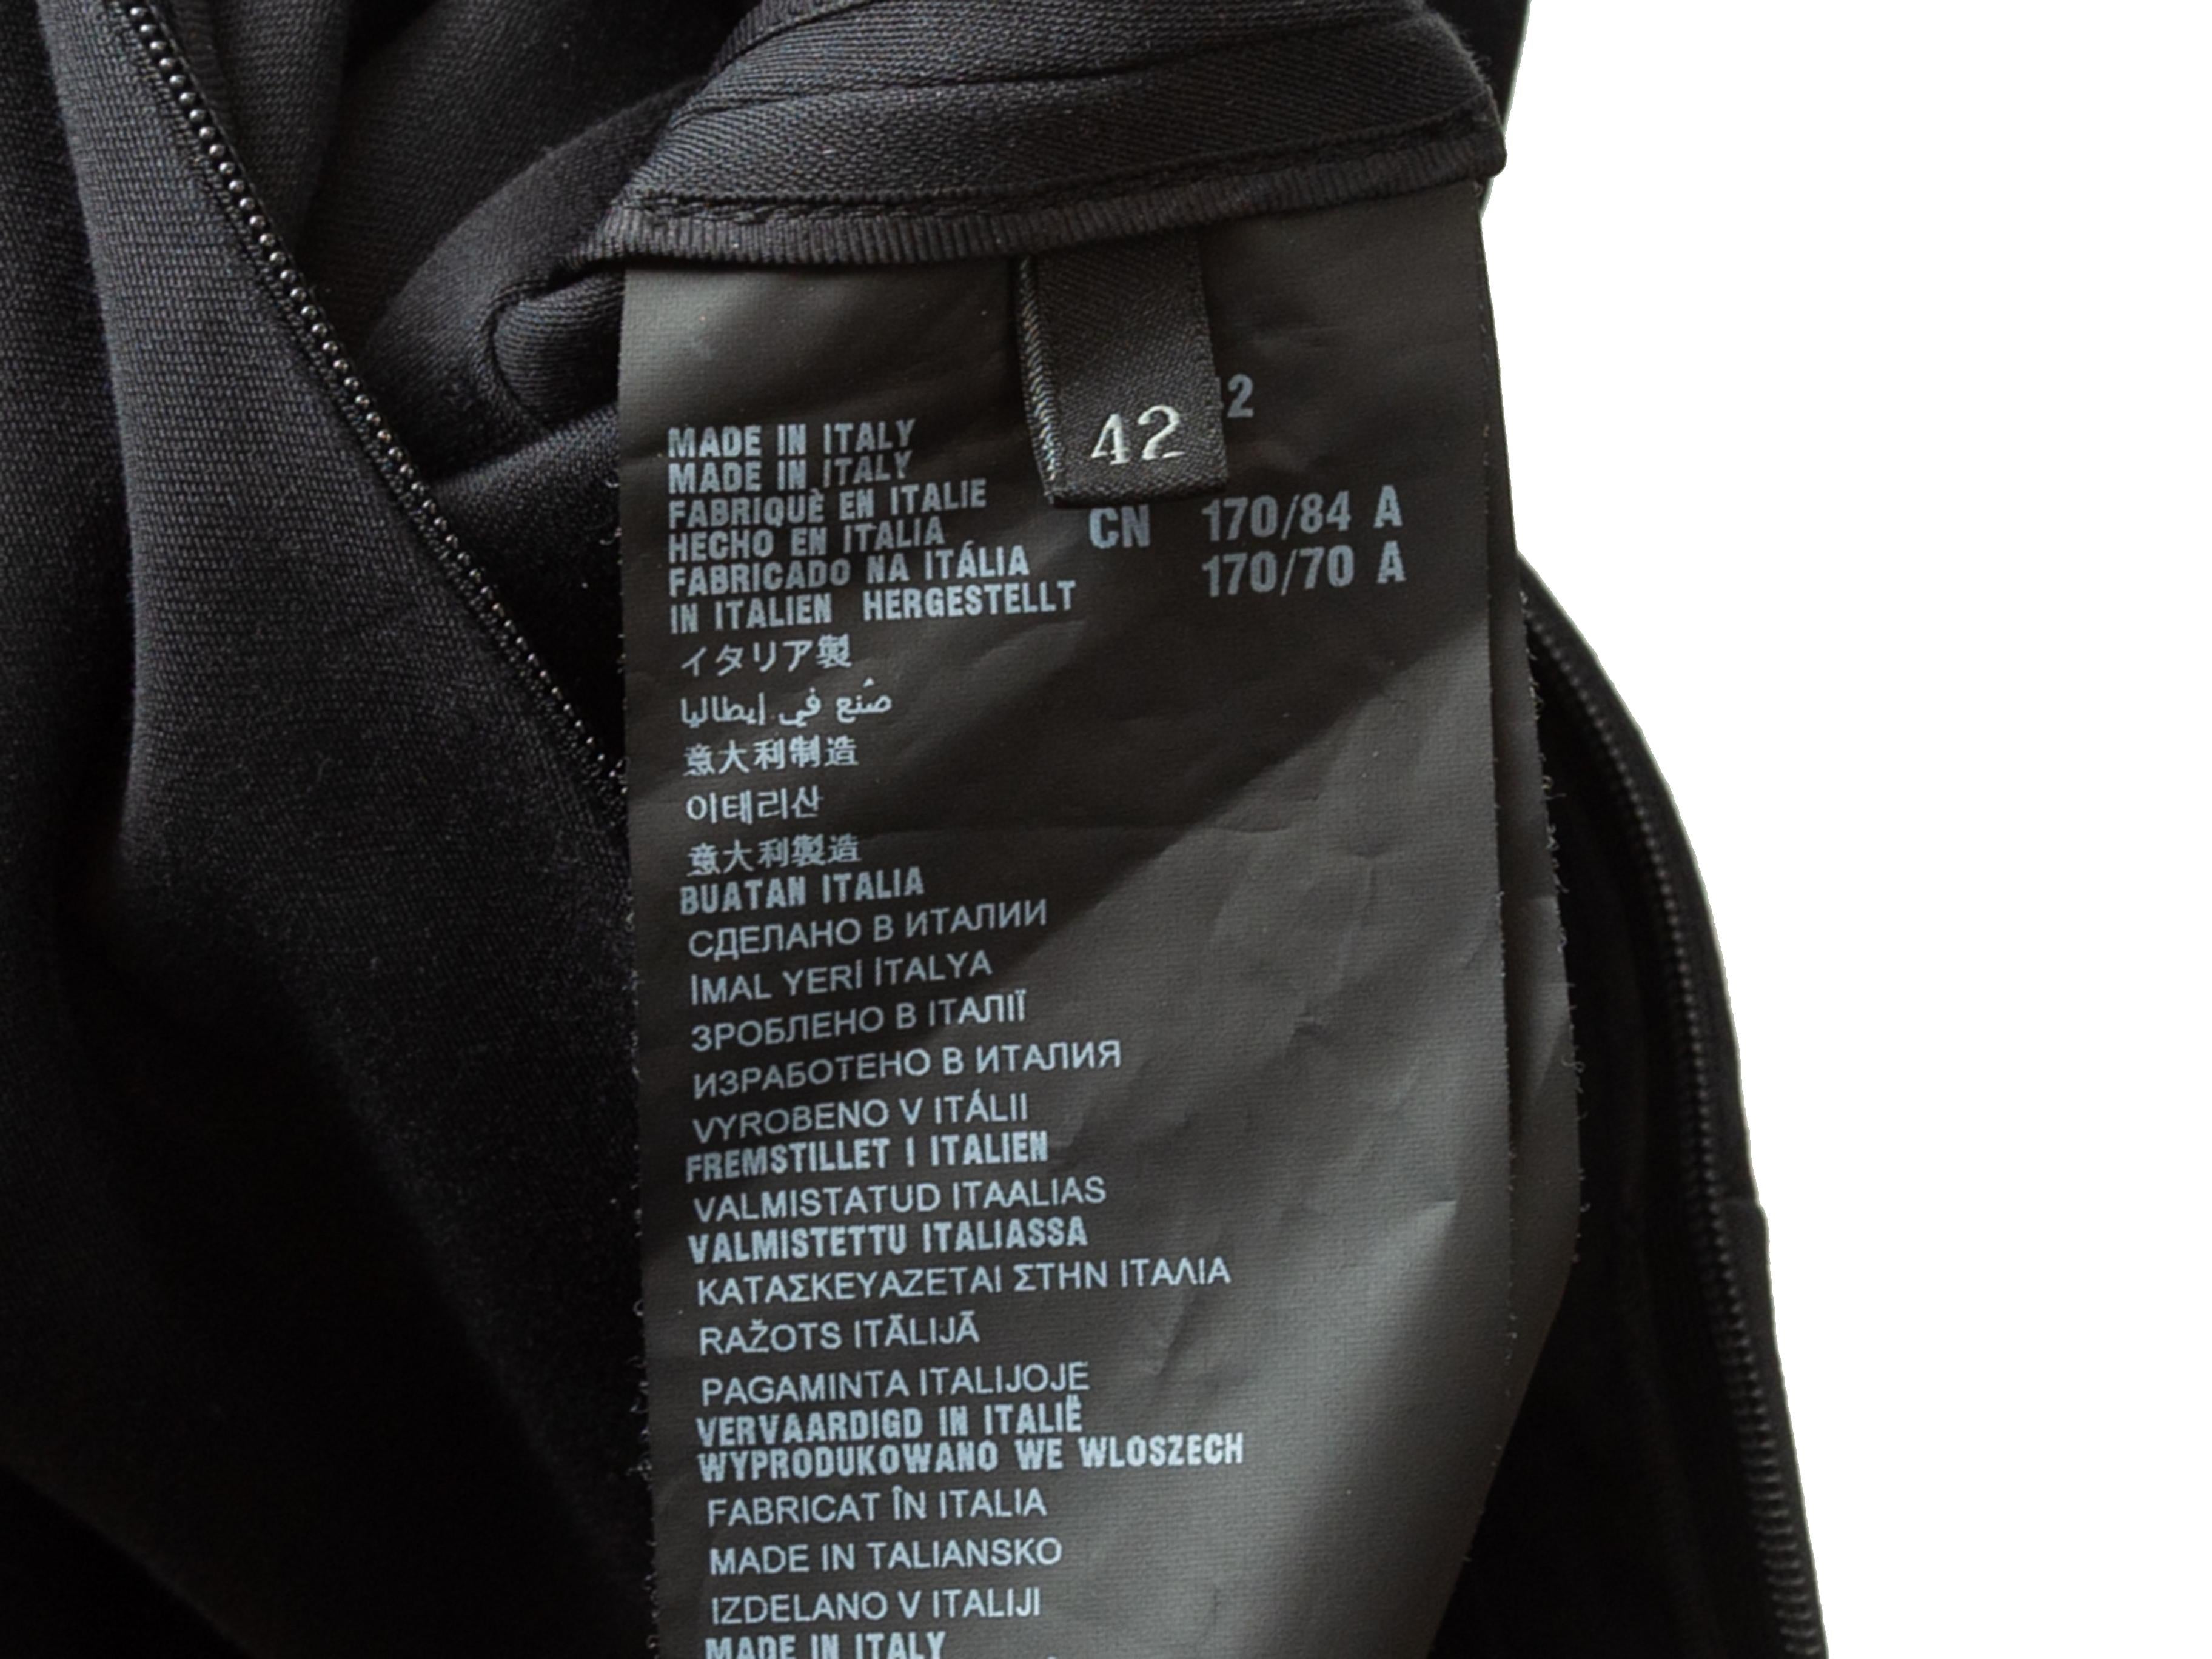 Product details: Black sleeveless fitted dress by Prada. Round neckline. Vent at back hem. Concealed zip closure at center back. Designer size 42. 42